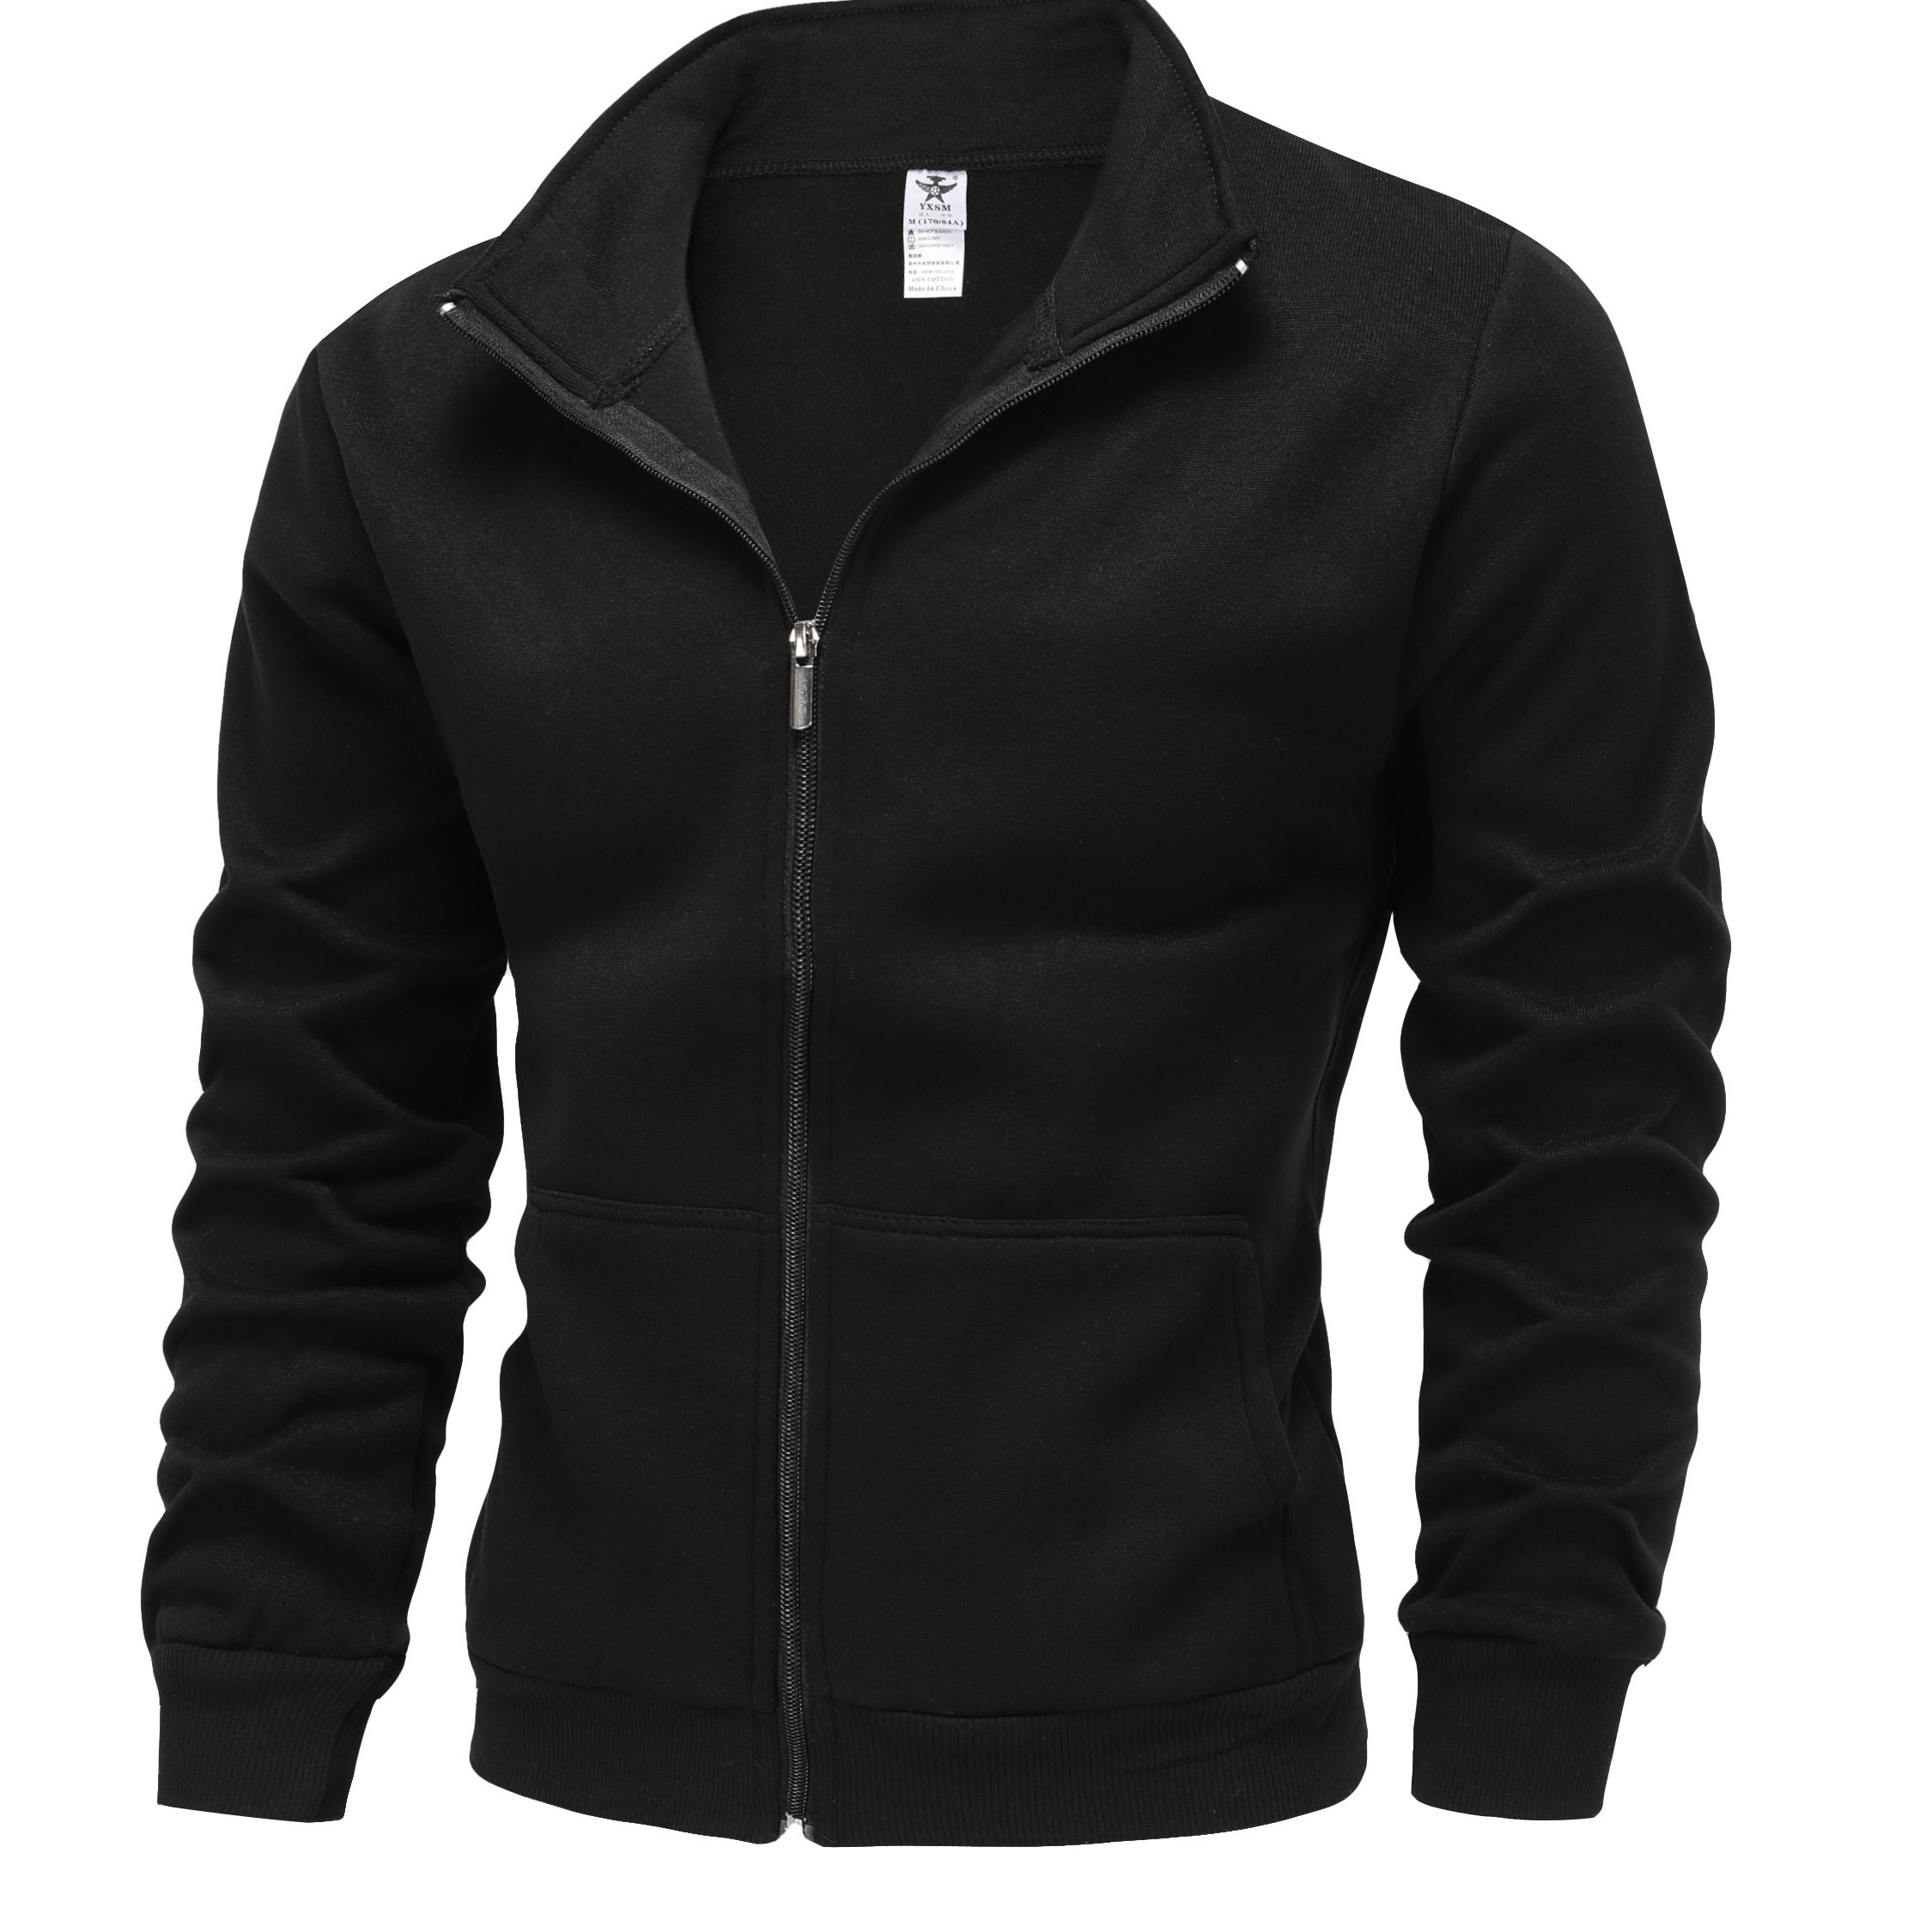 

Warm High Neck Jacket, Men's Casual Slant Pocket Zip Up Athletic Jacket For Fall Winter